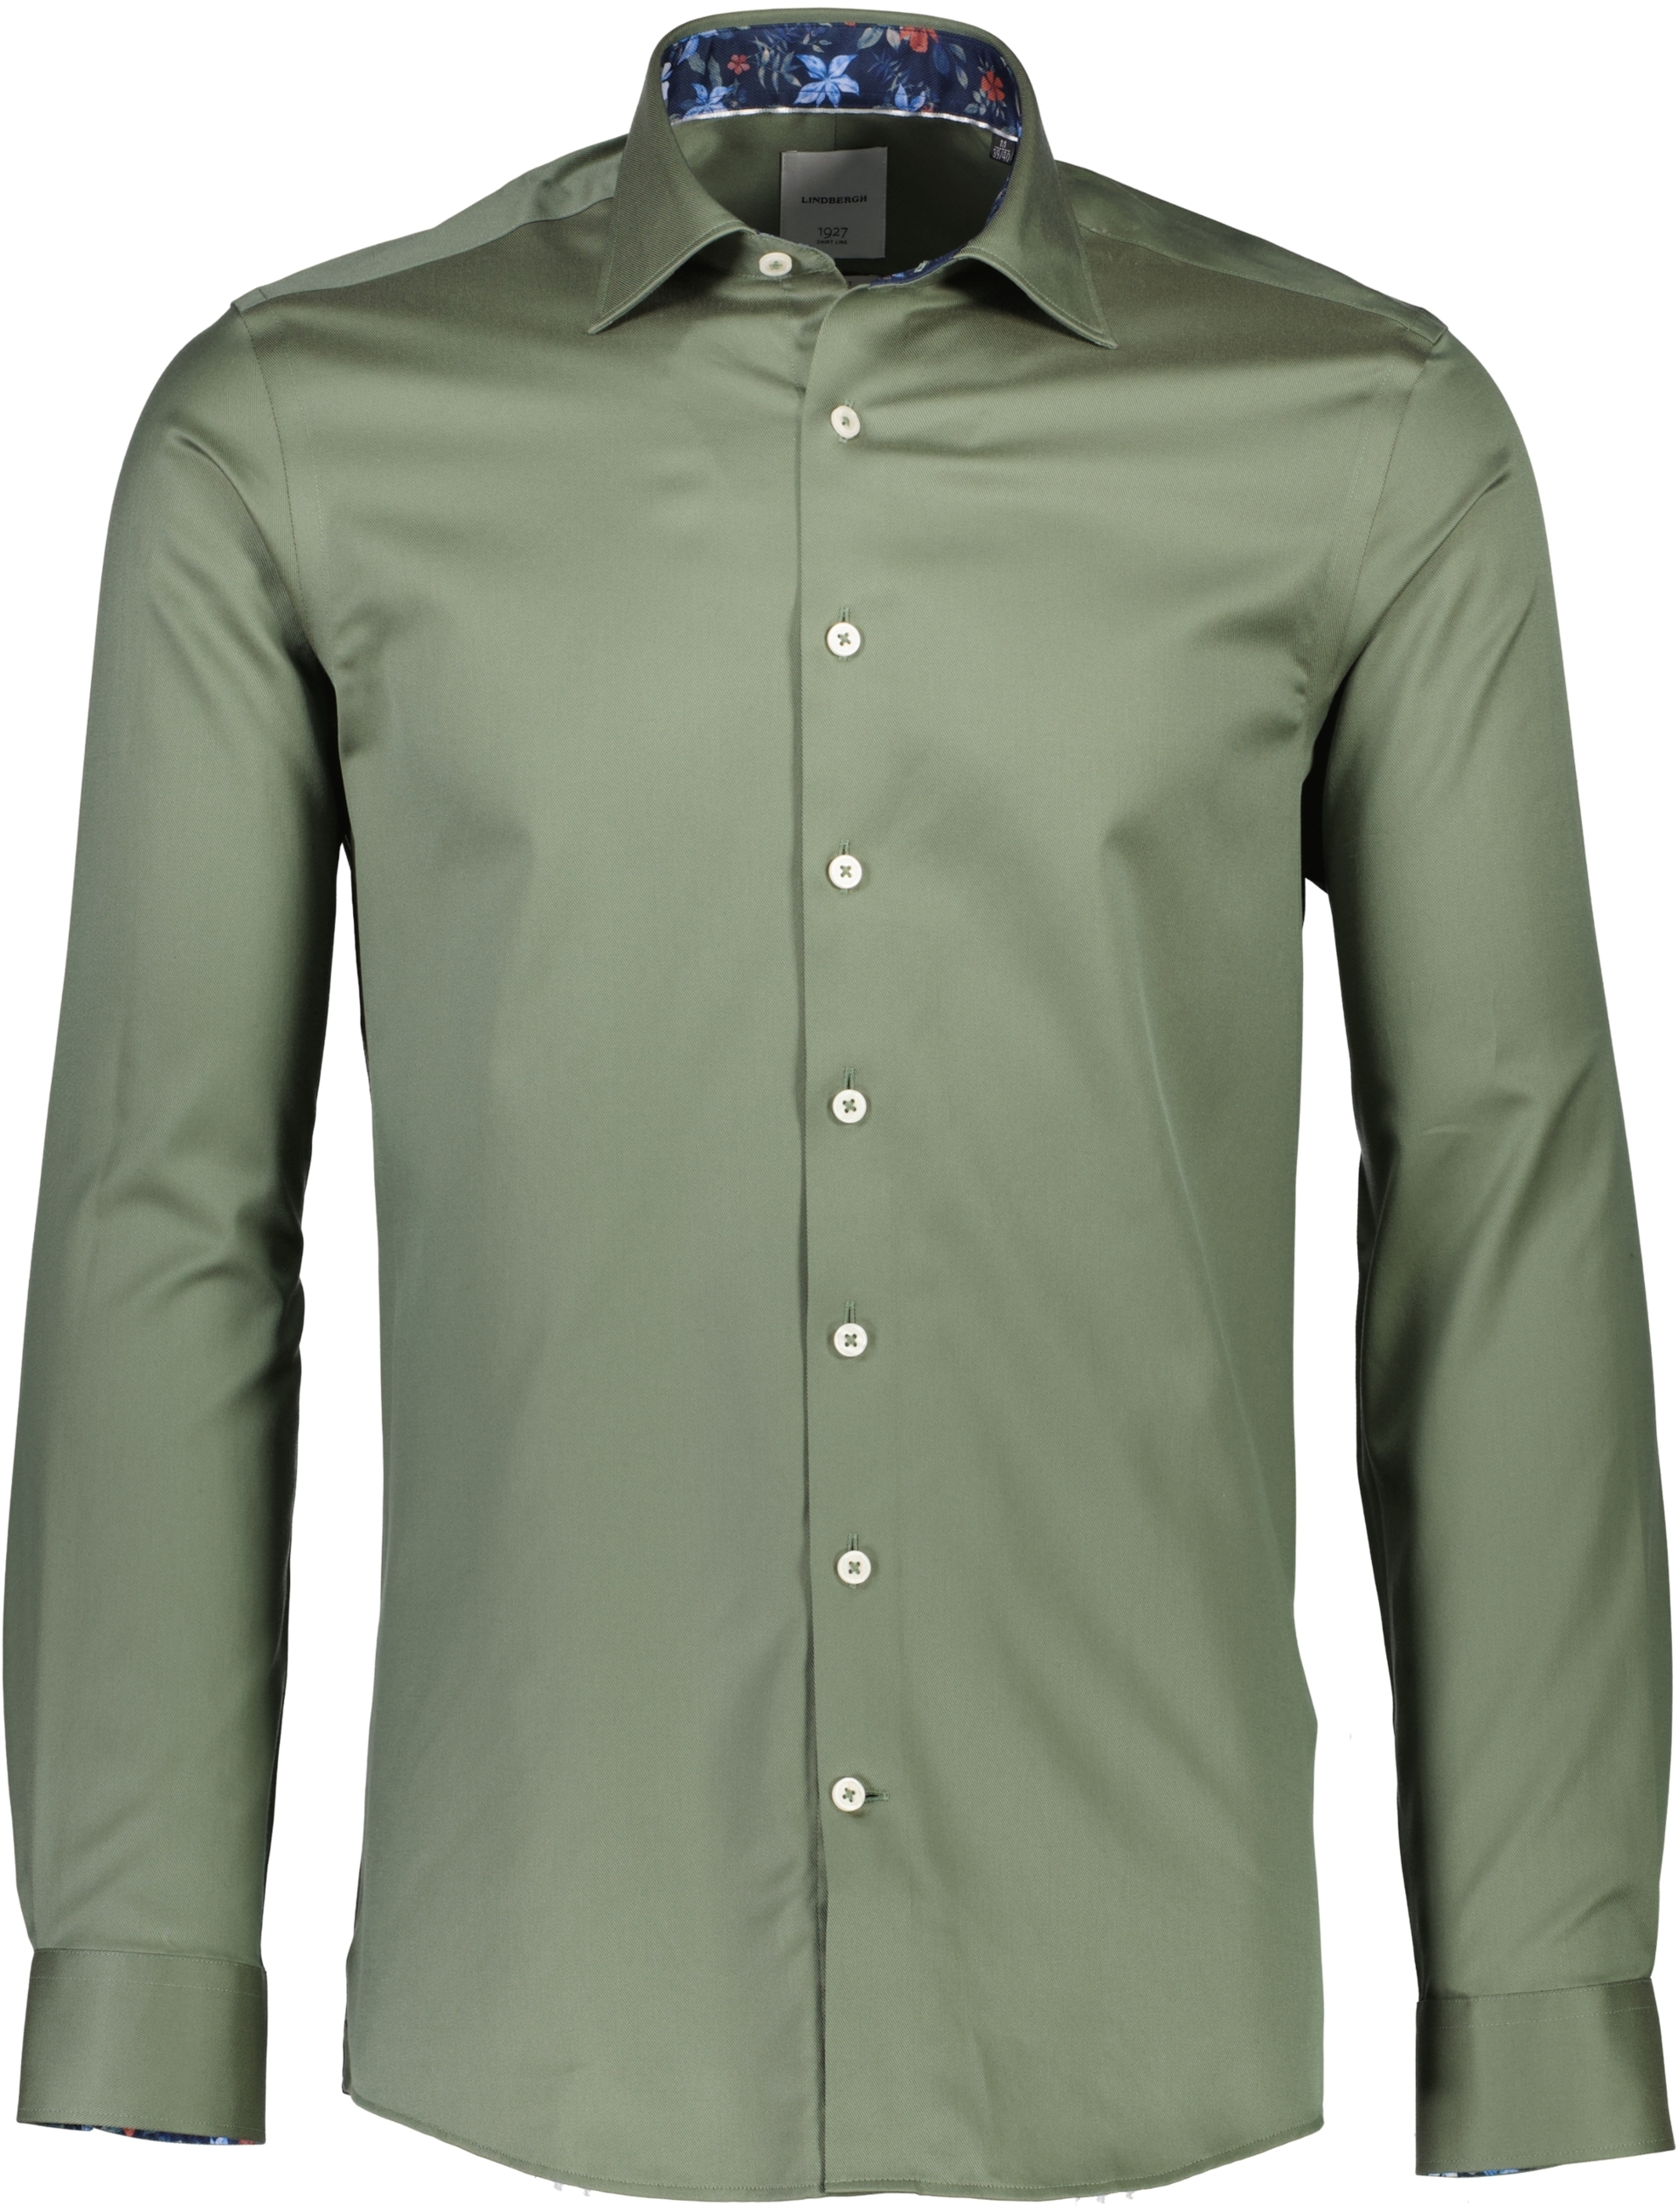 Lindbergh Business casual shirt green / army